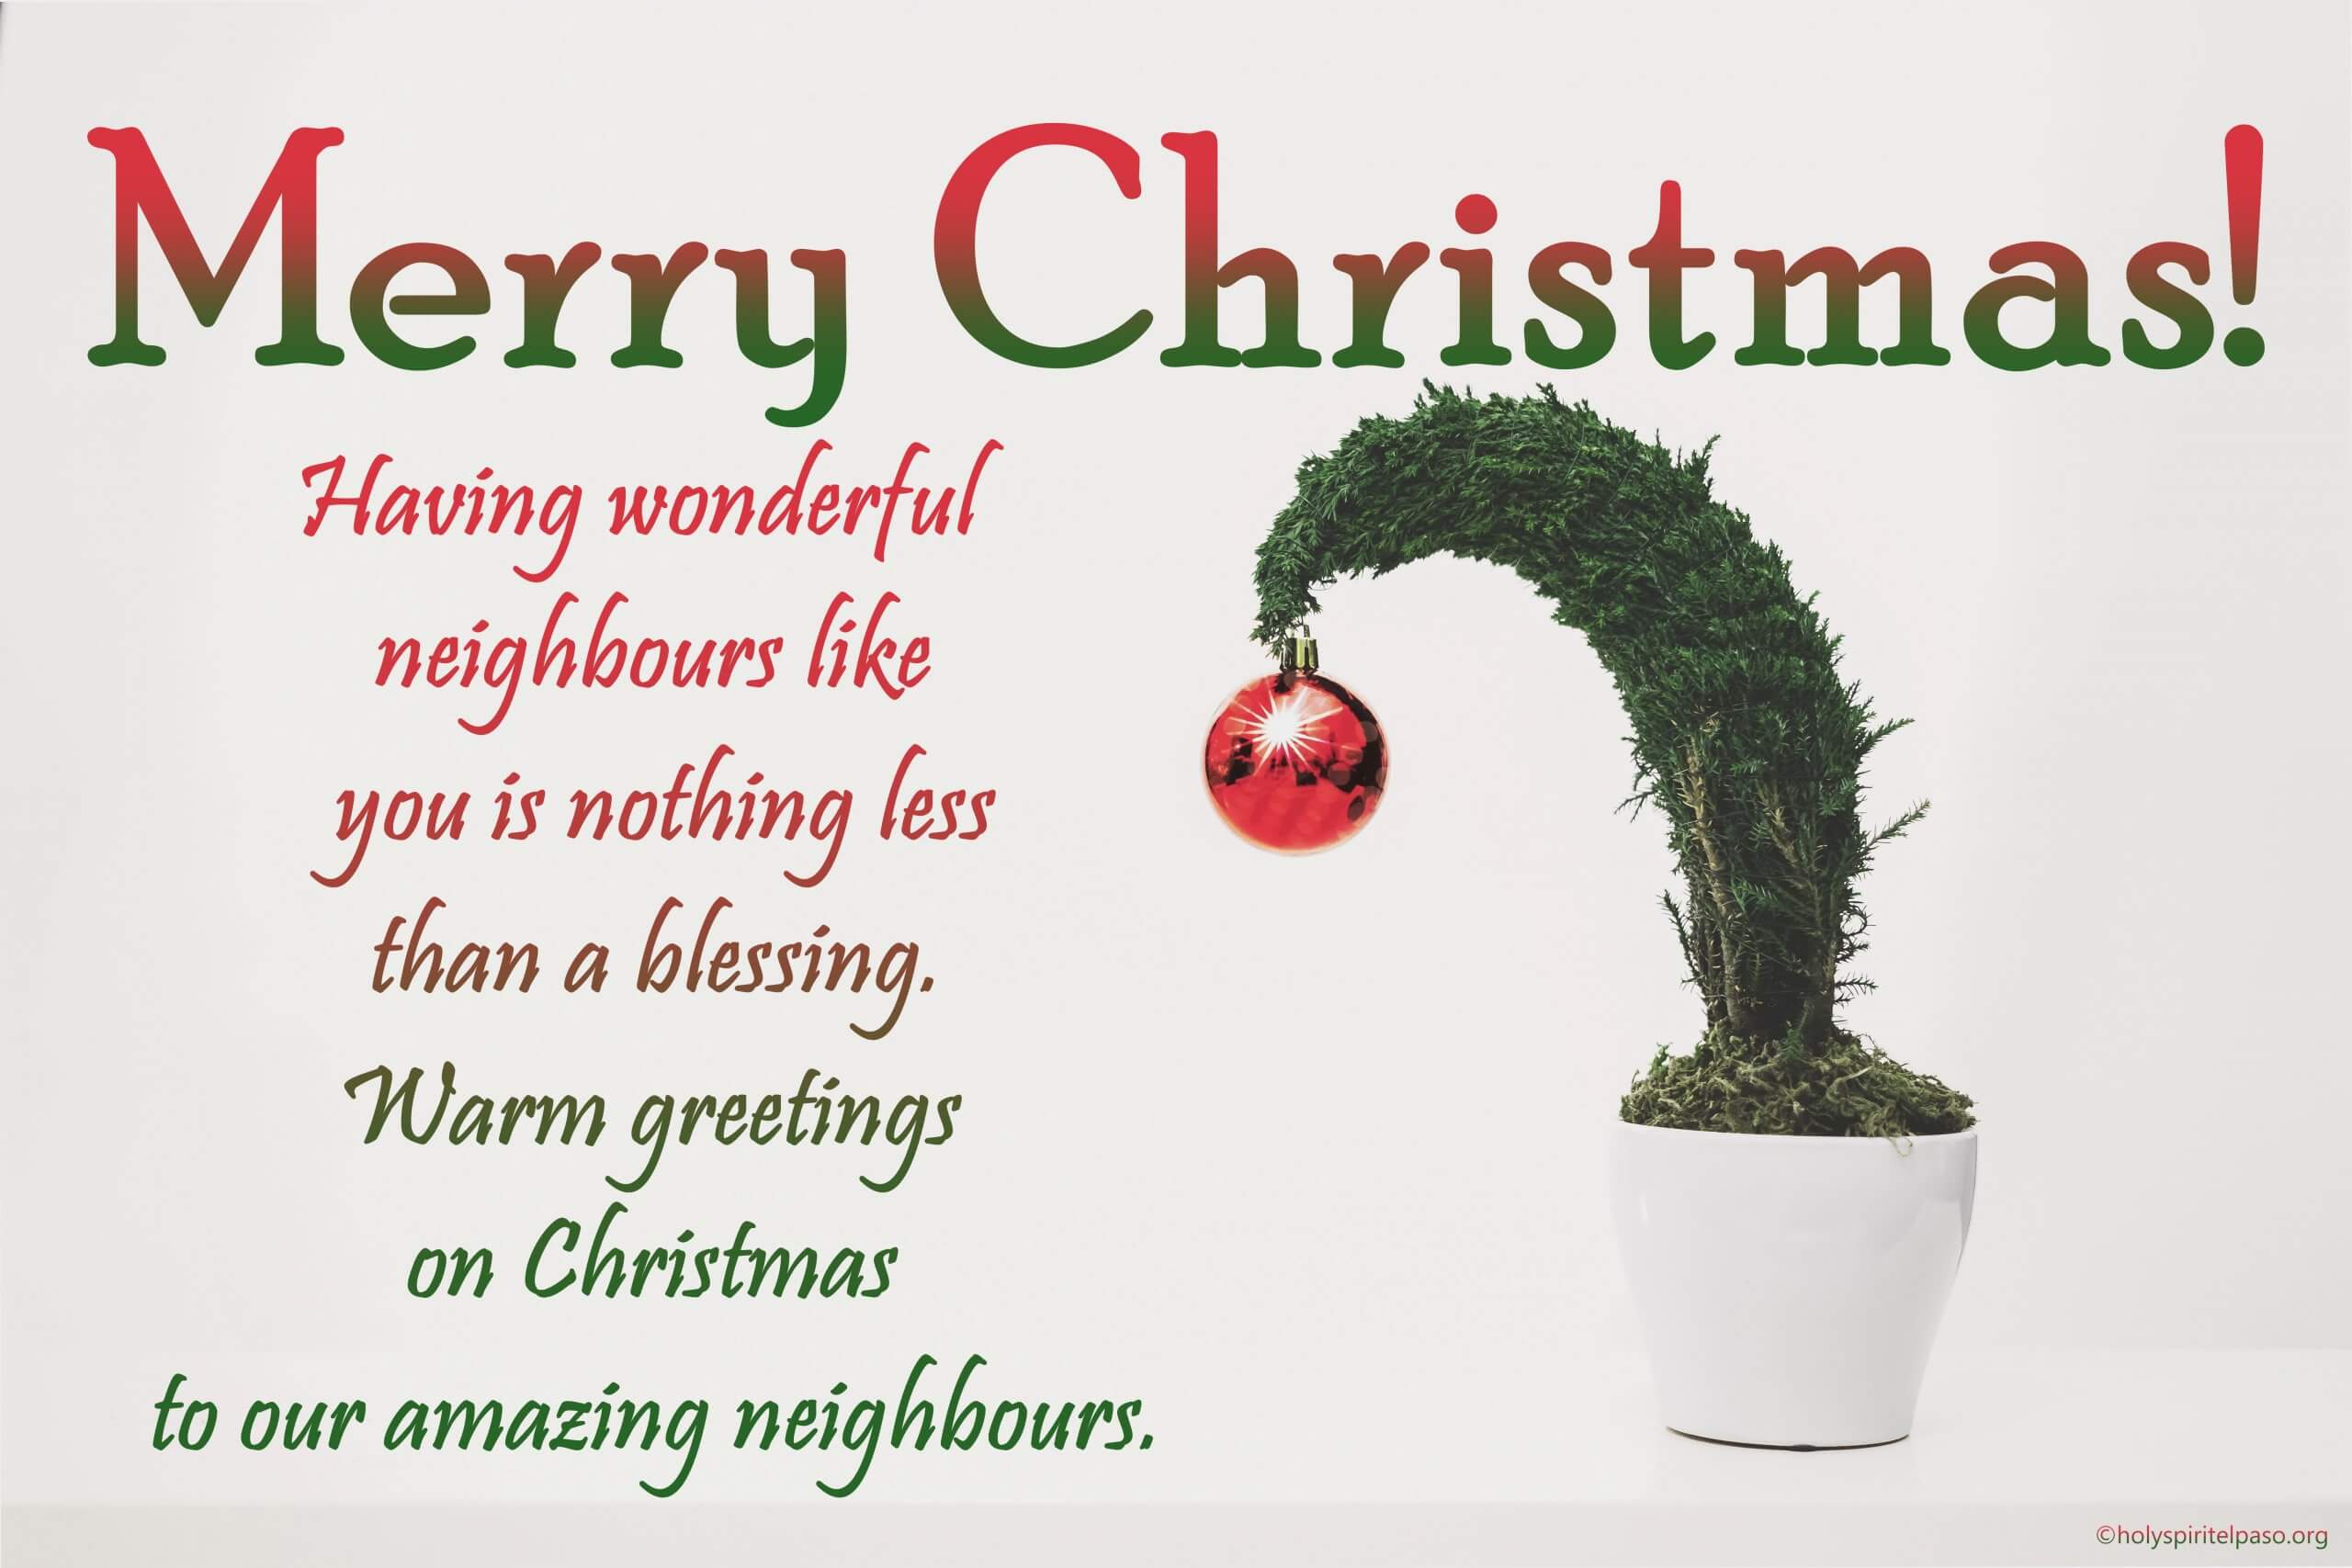 Merry Christmas, Neighbors! Wishing you a bountiful and surprise